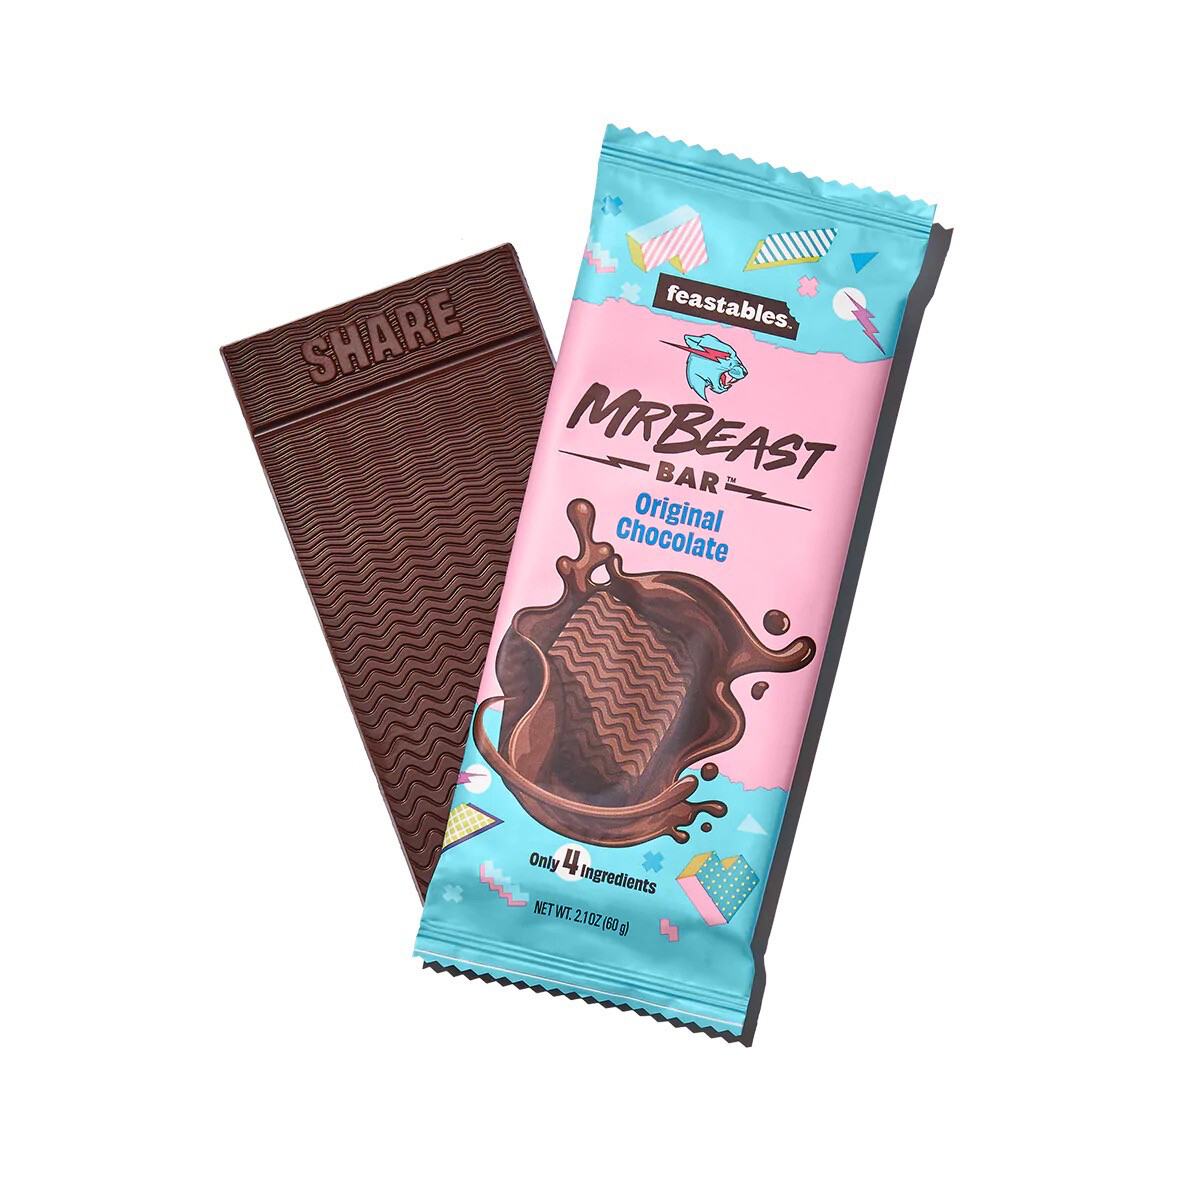 Feastables Mr Beast Bar Original Chocolate Only 4 Ingredients 